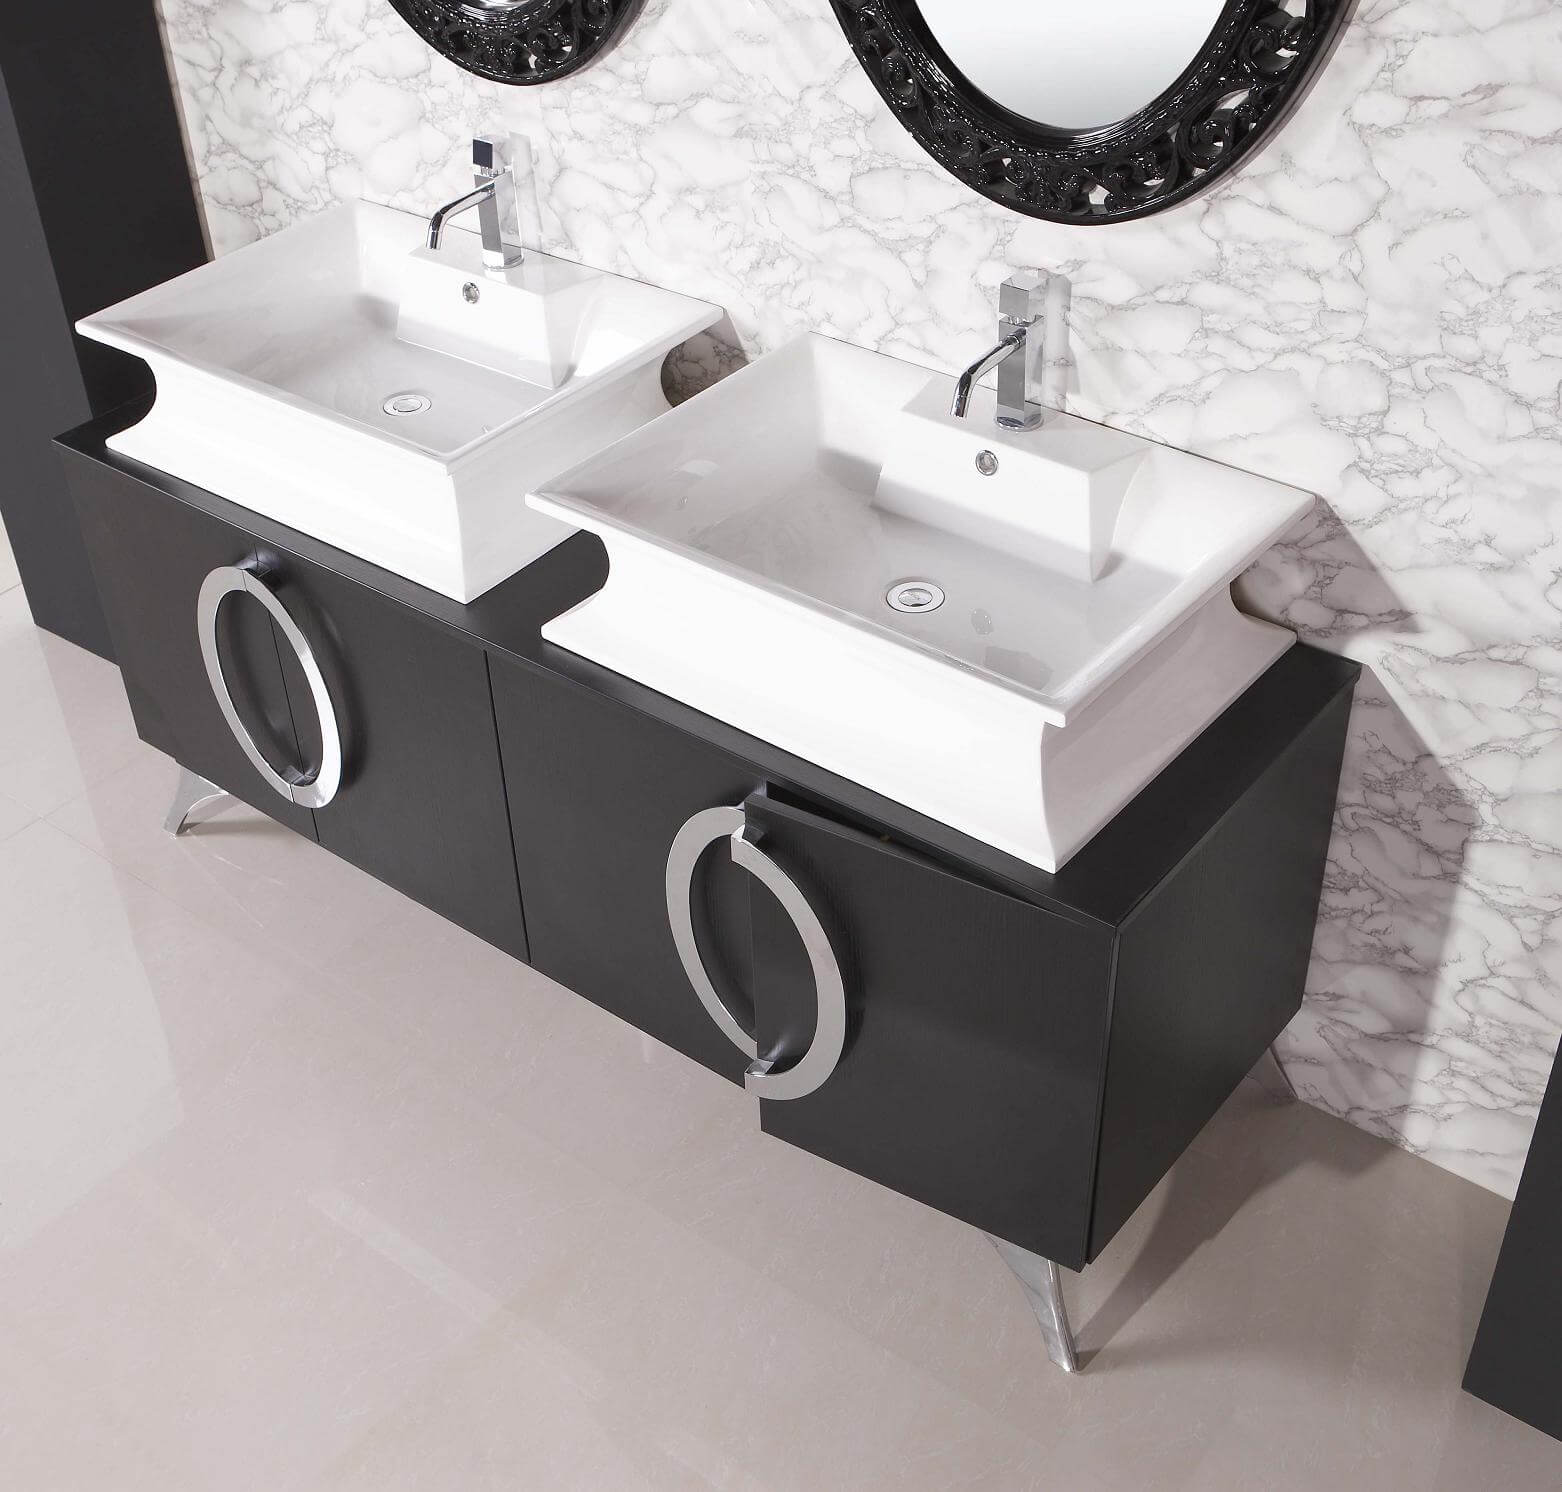 Bathroom sink design 5